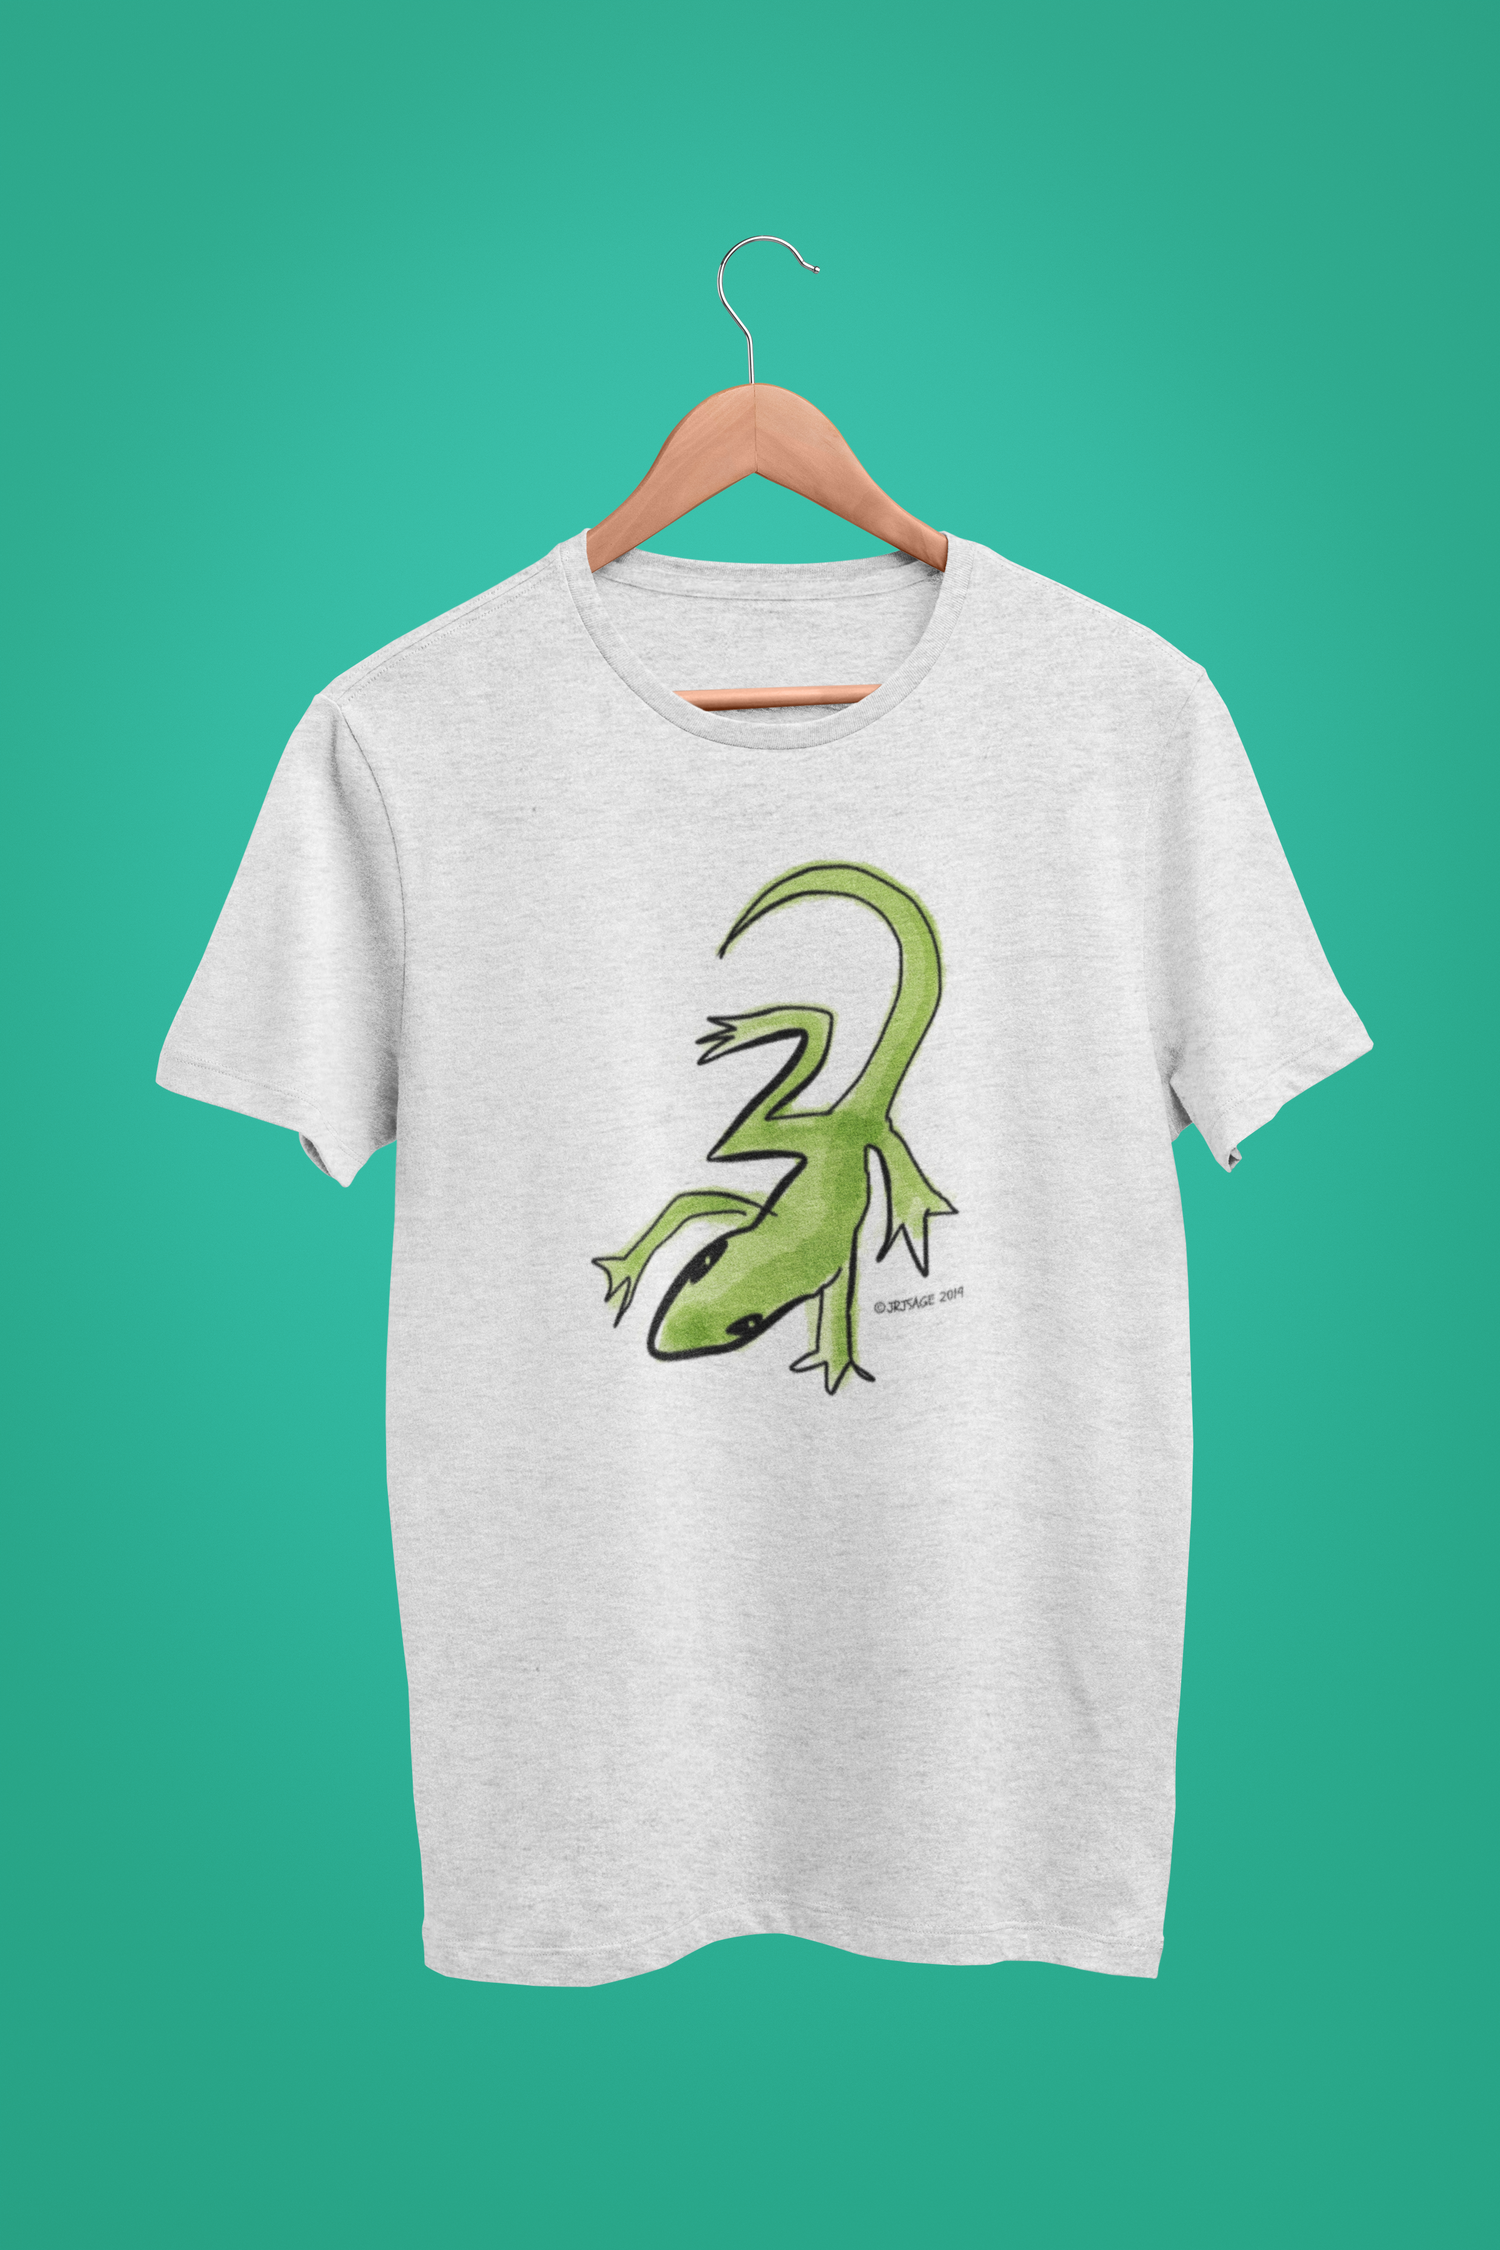 Lizard T-shirt - Illustrated Lounge Lizard T-shirt on vegan cream heather grey cotton t-shirts by Hector and Bone